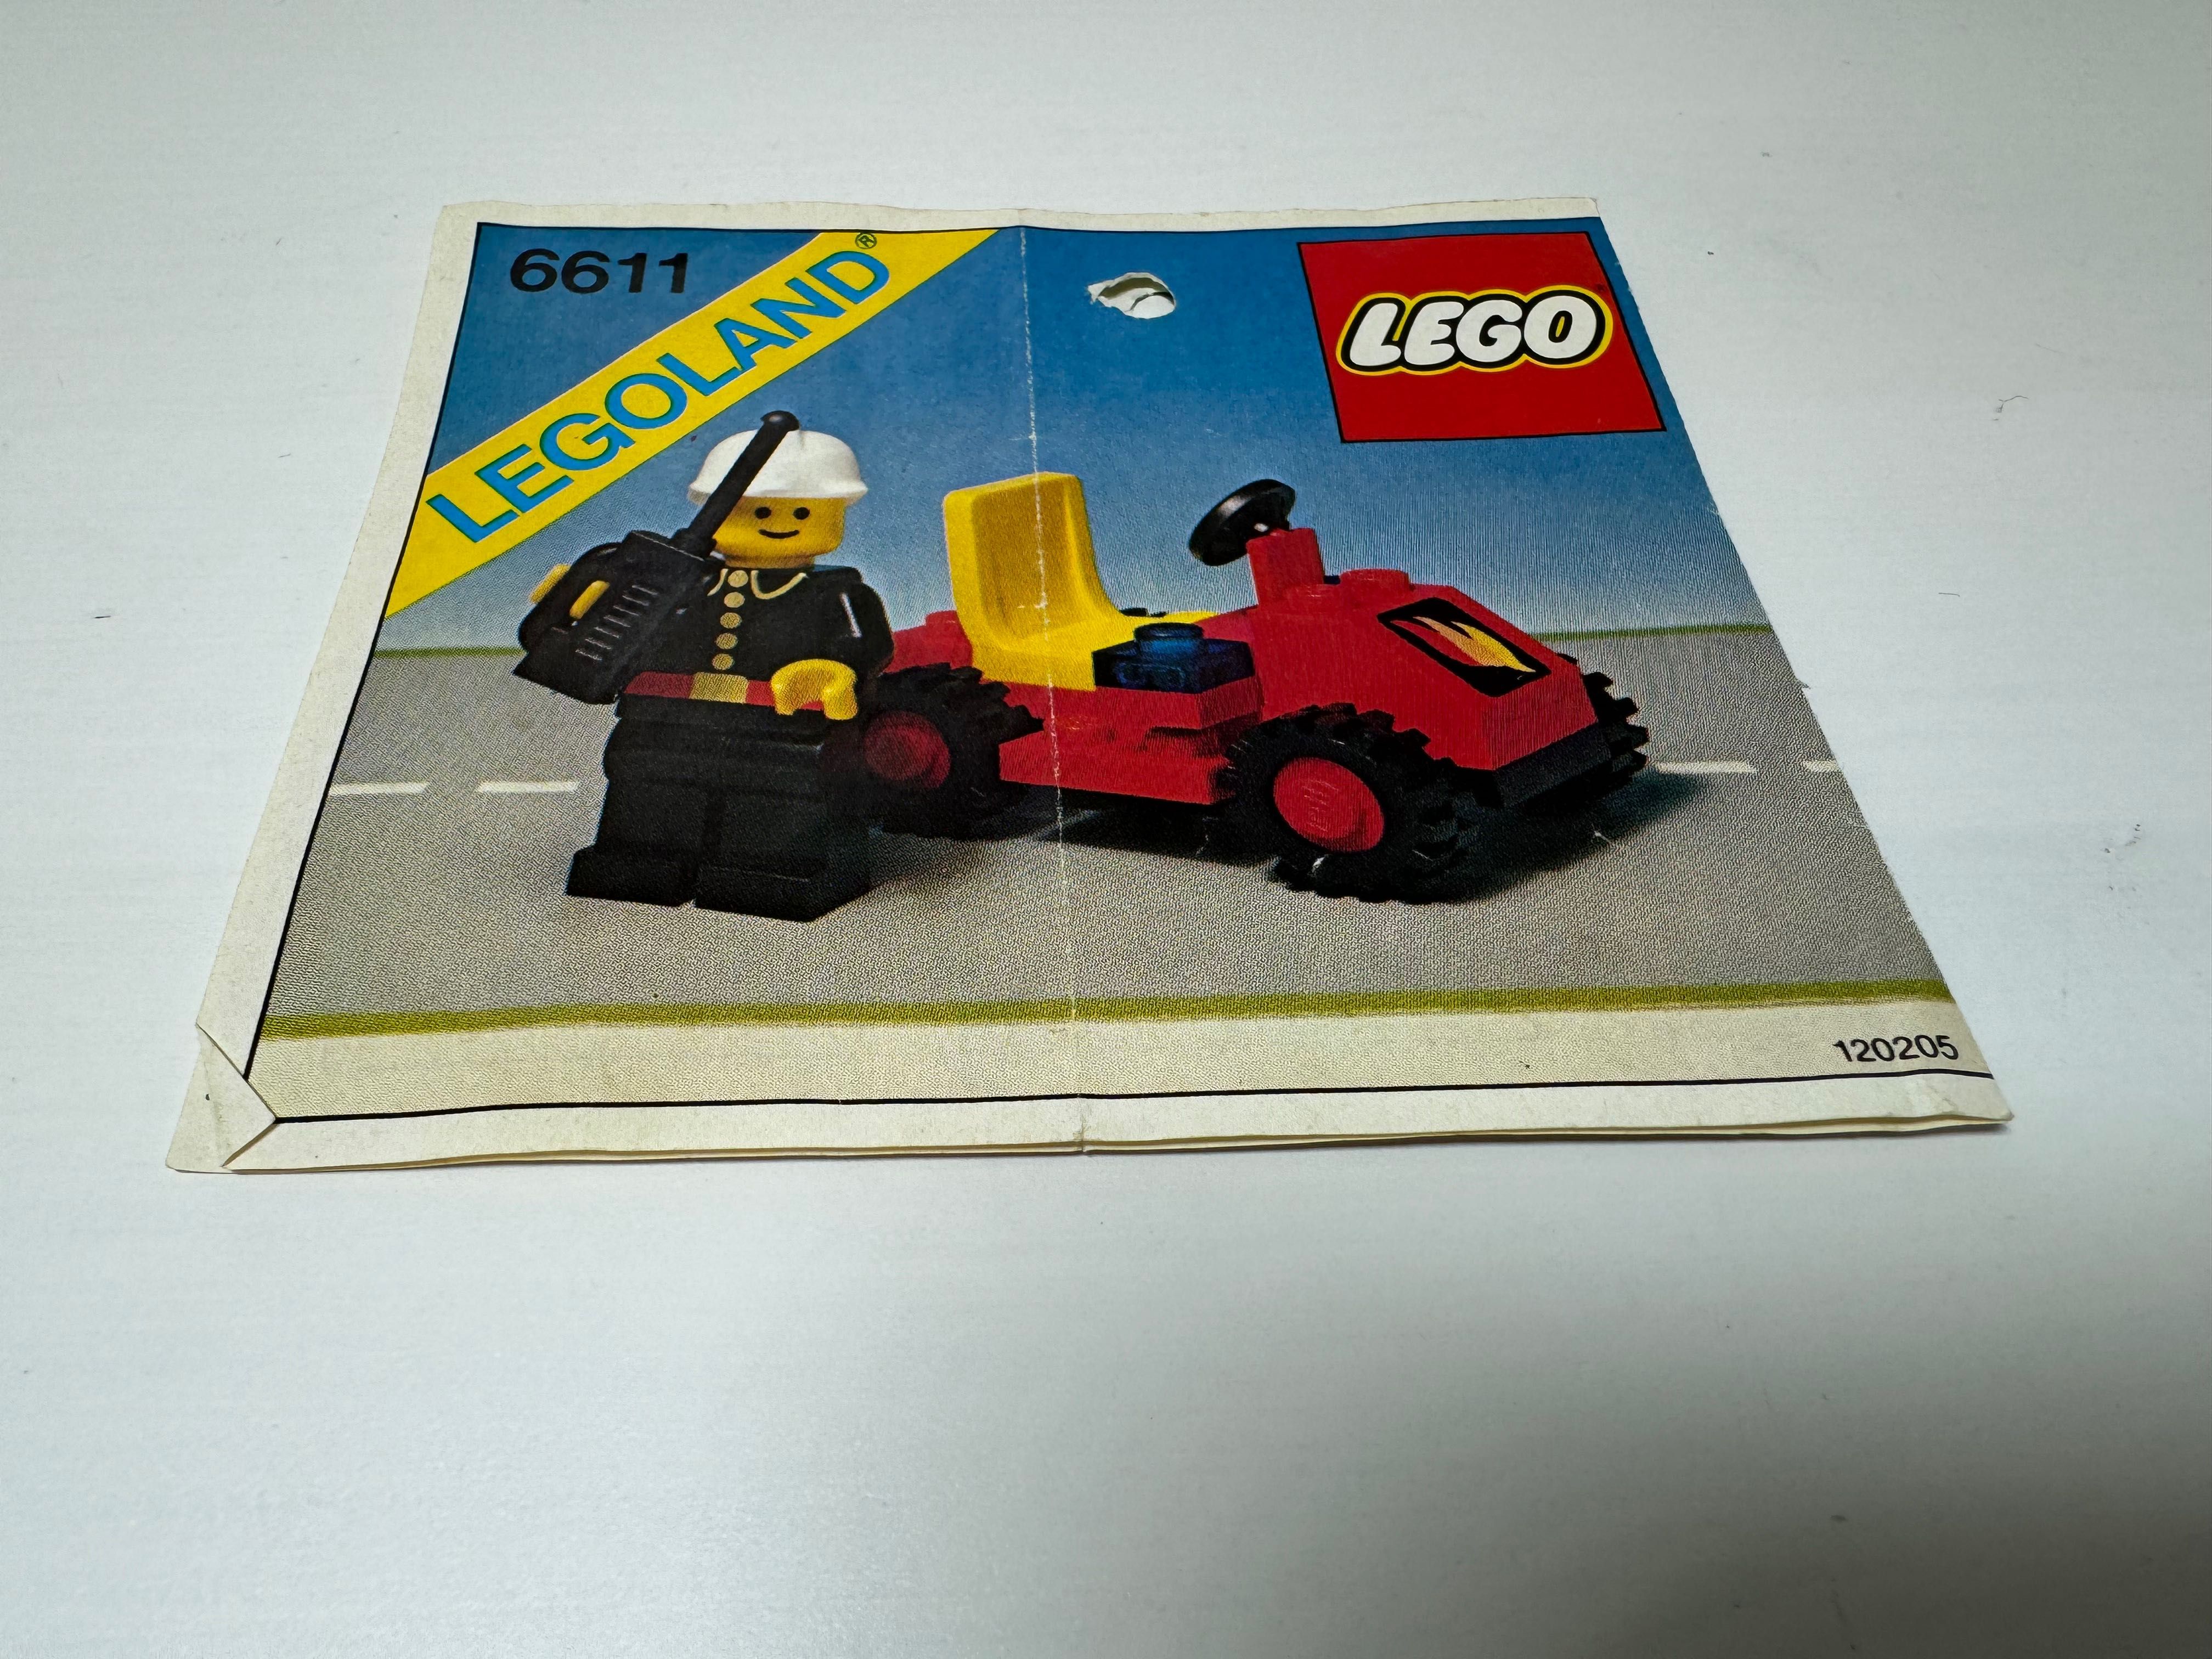 LEGO classic town; zestaw 6611 Fire Chief's Car